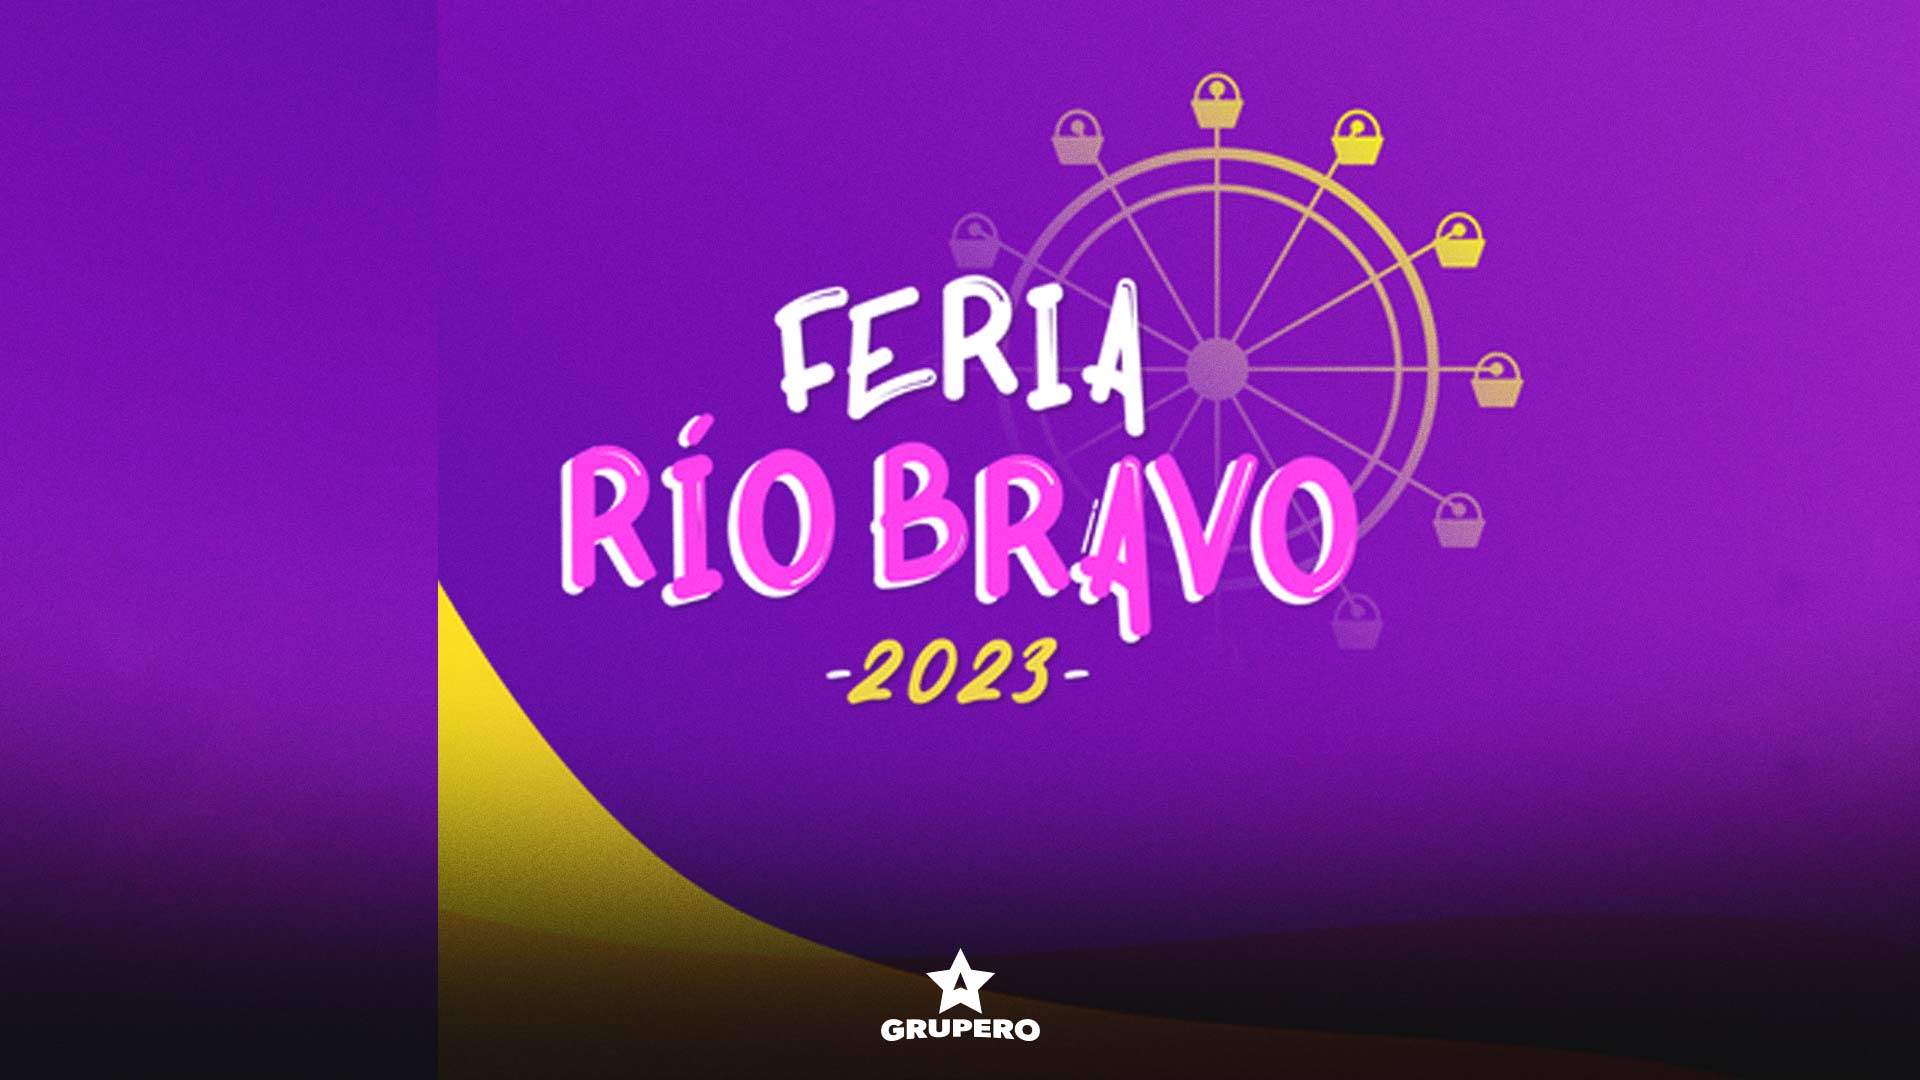 Expo Feria Río Bravo 2023